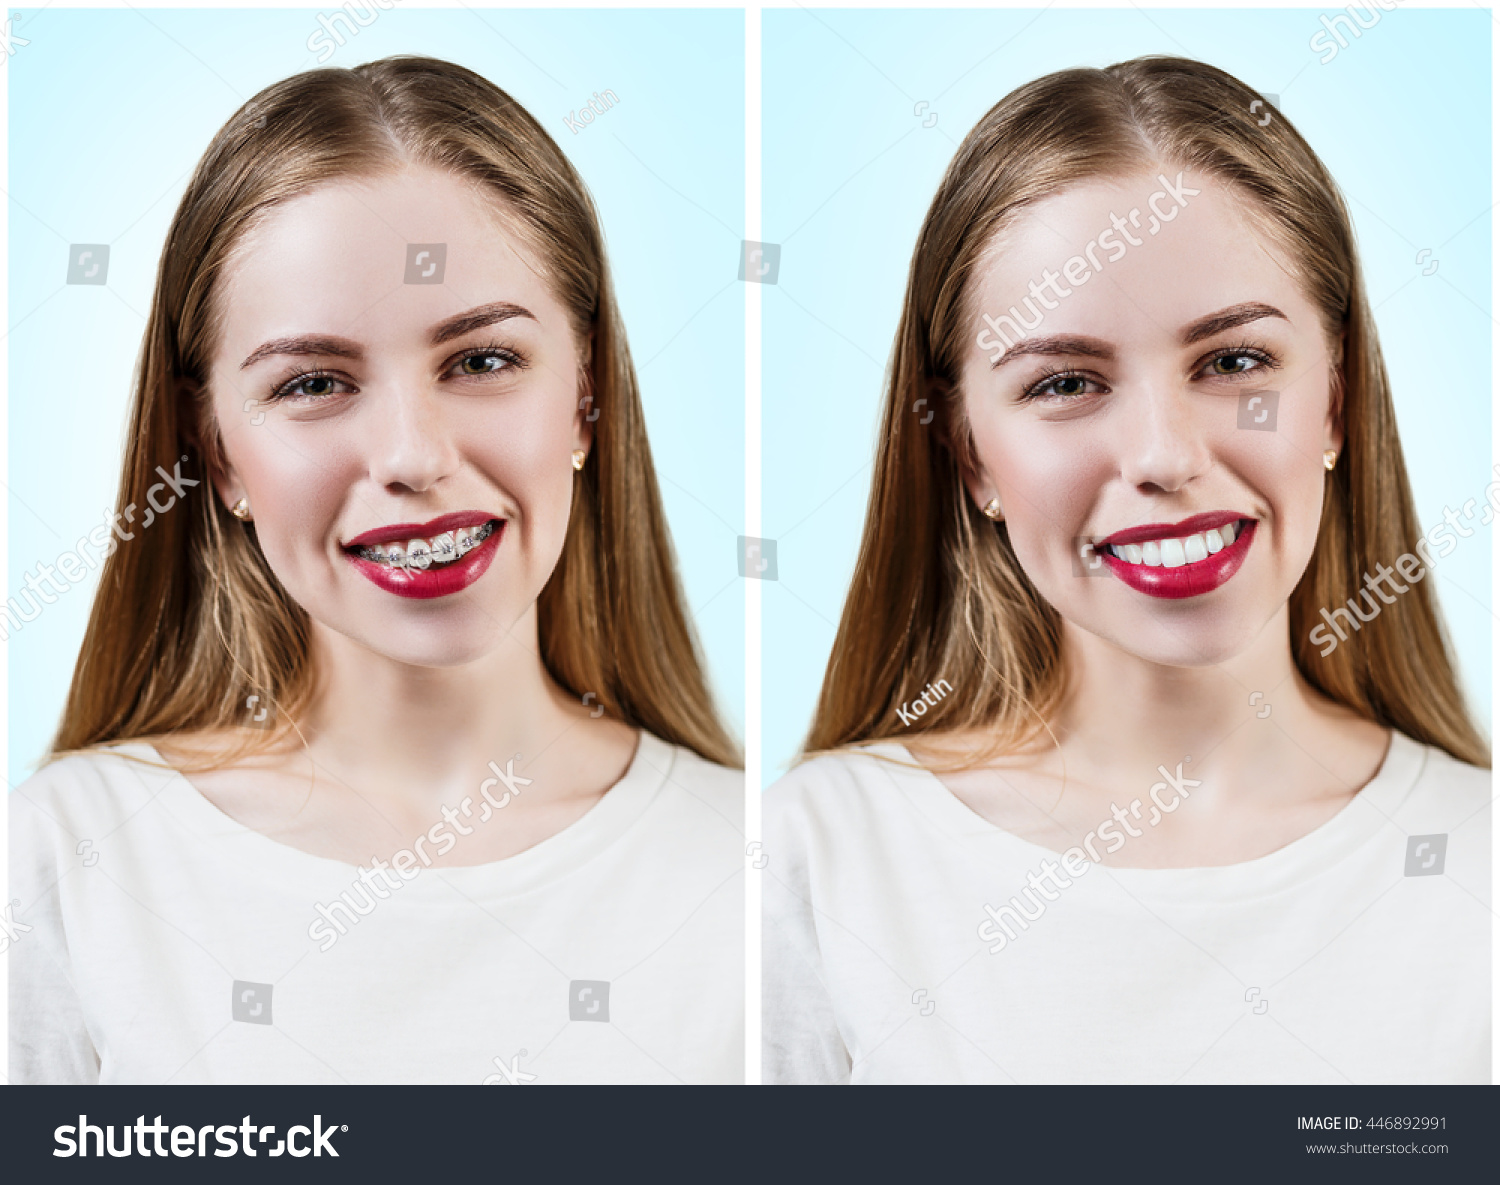 Овал лица после брекетов фото до и после